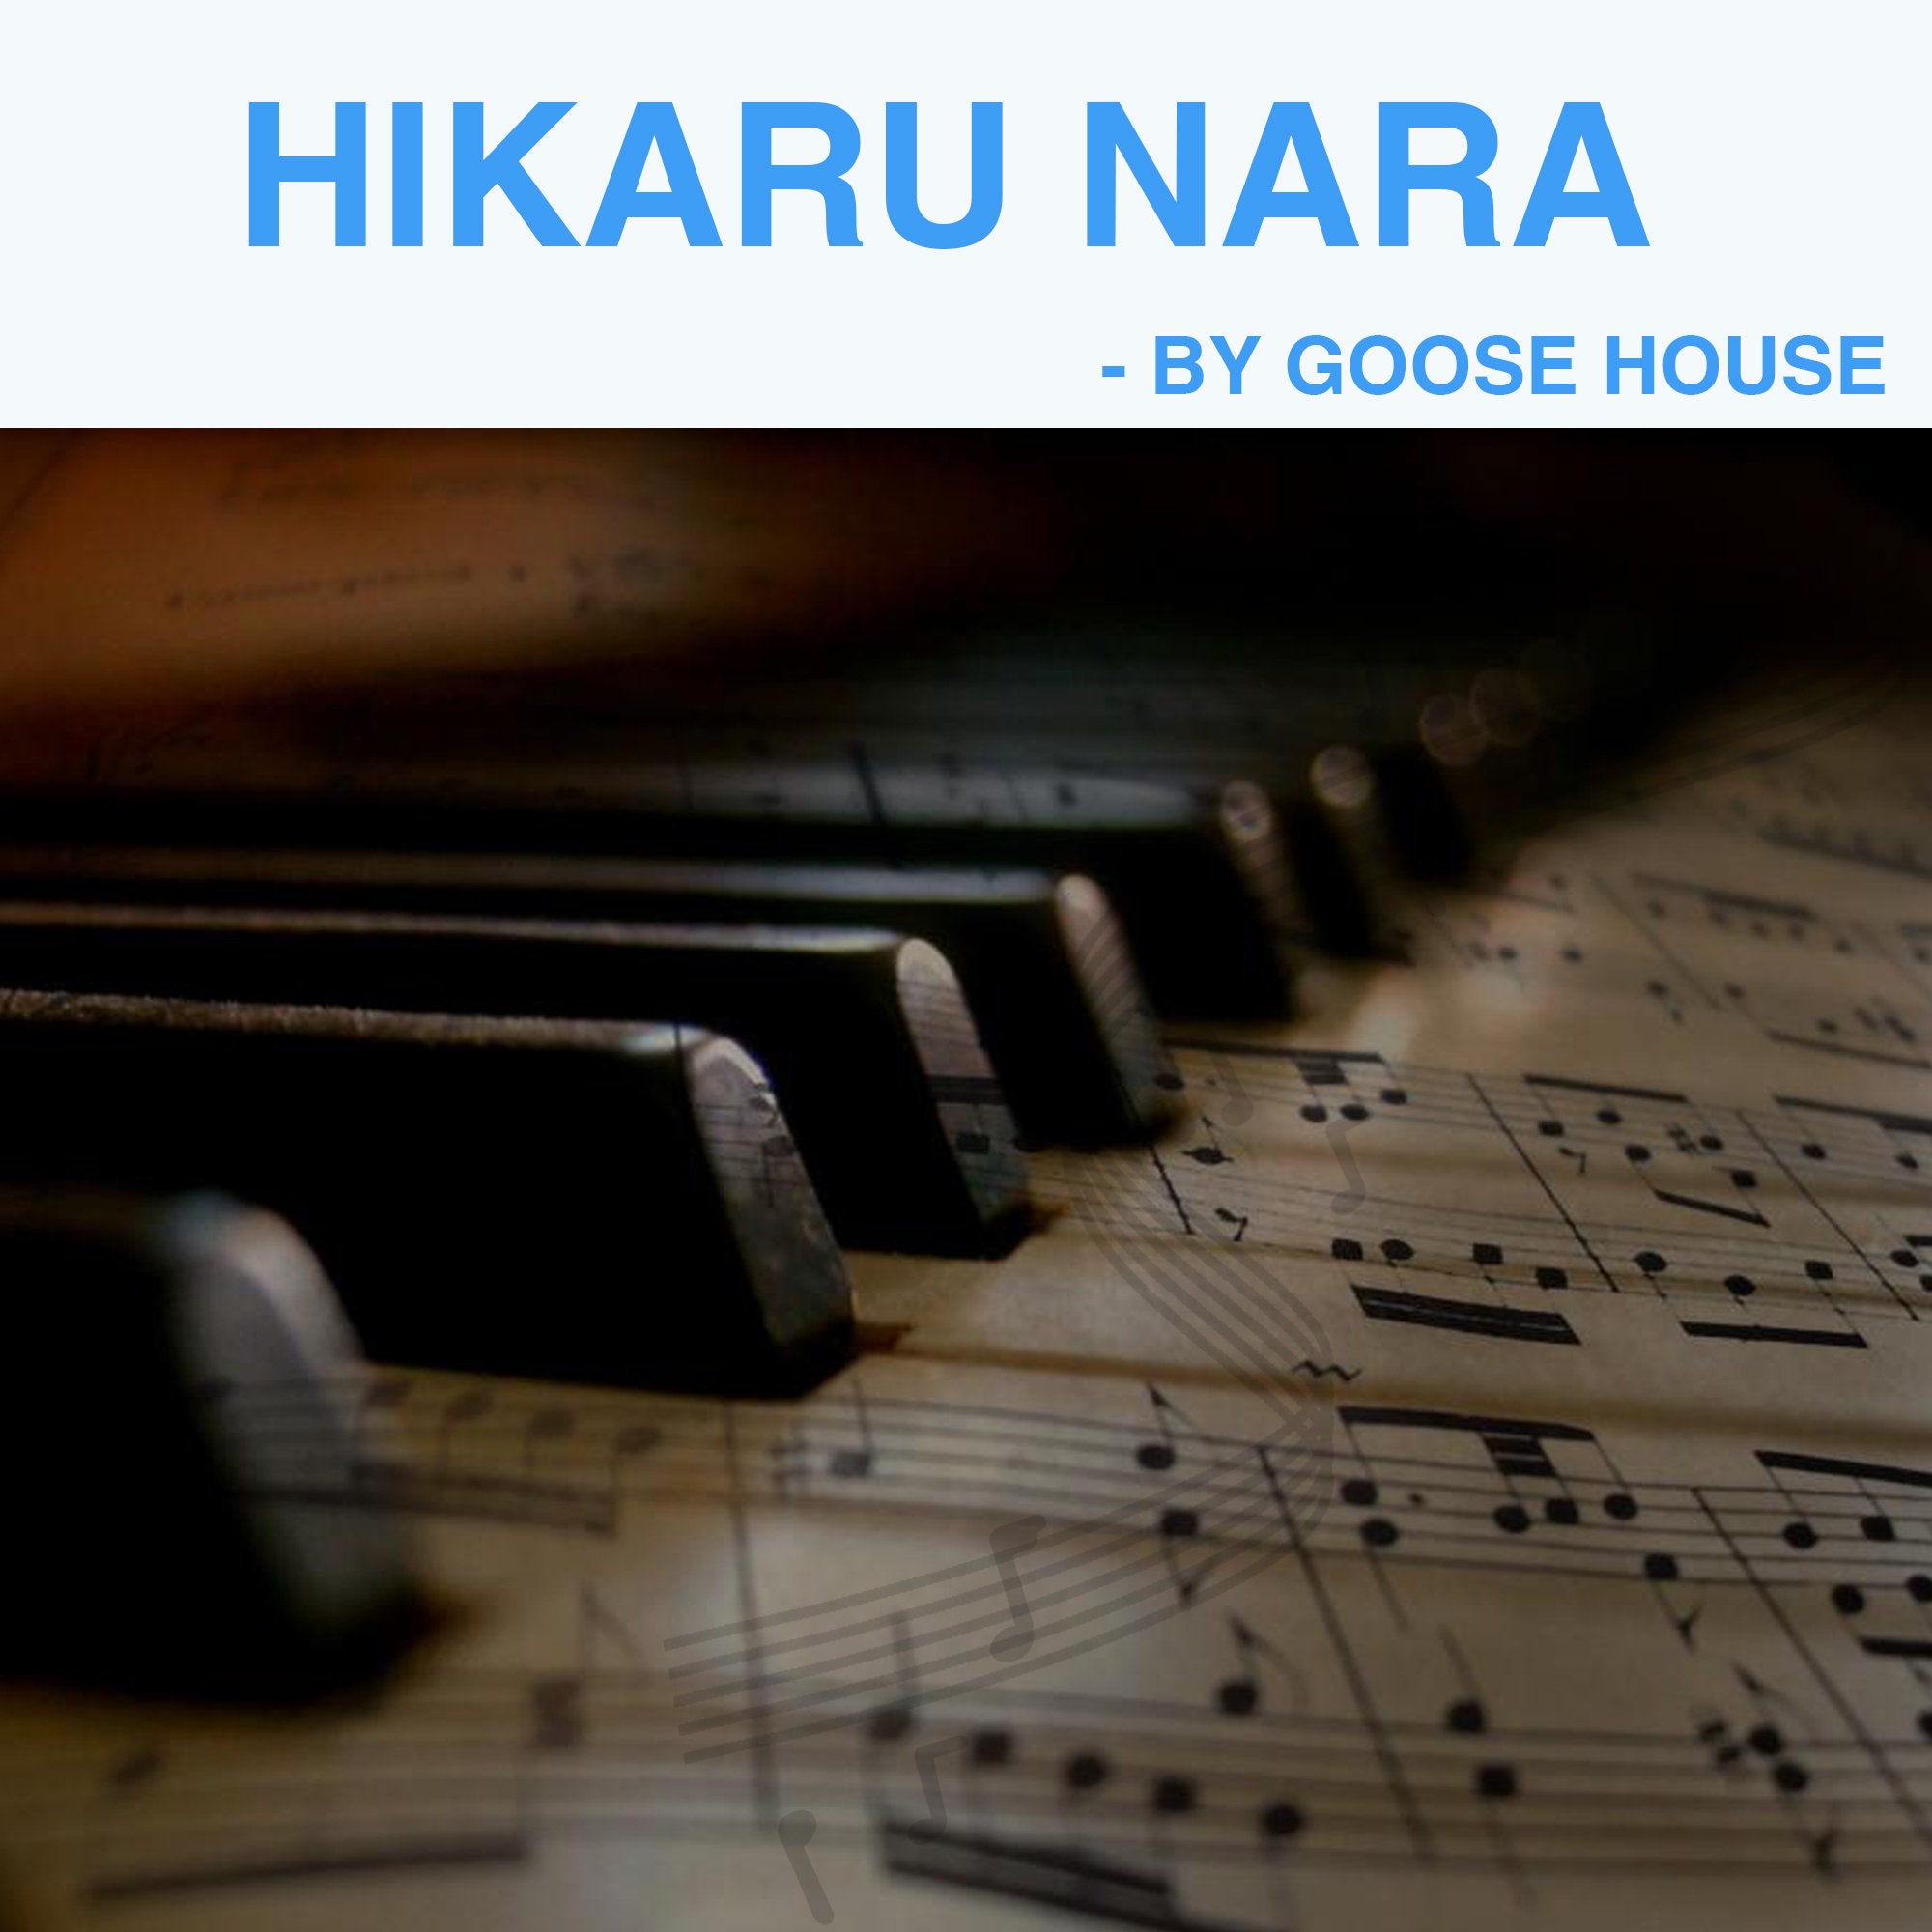 Hikaru Nara-Your Lie in April OP- Free Piano Sheet Music & Piano Chords